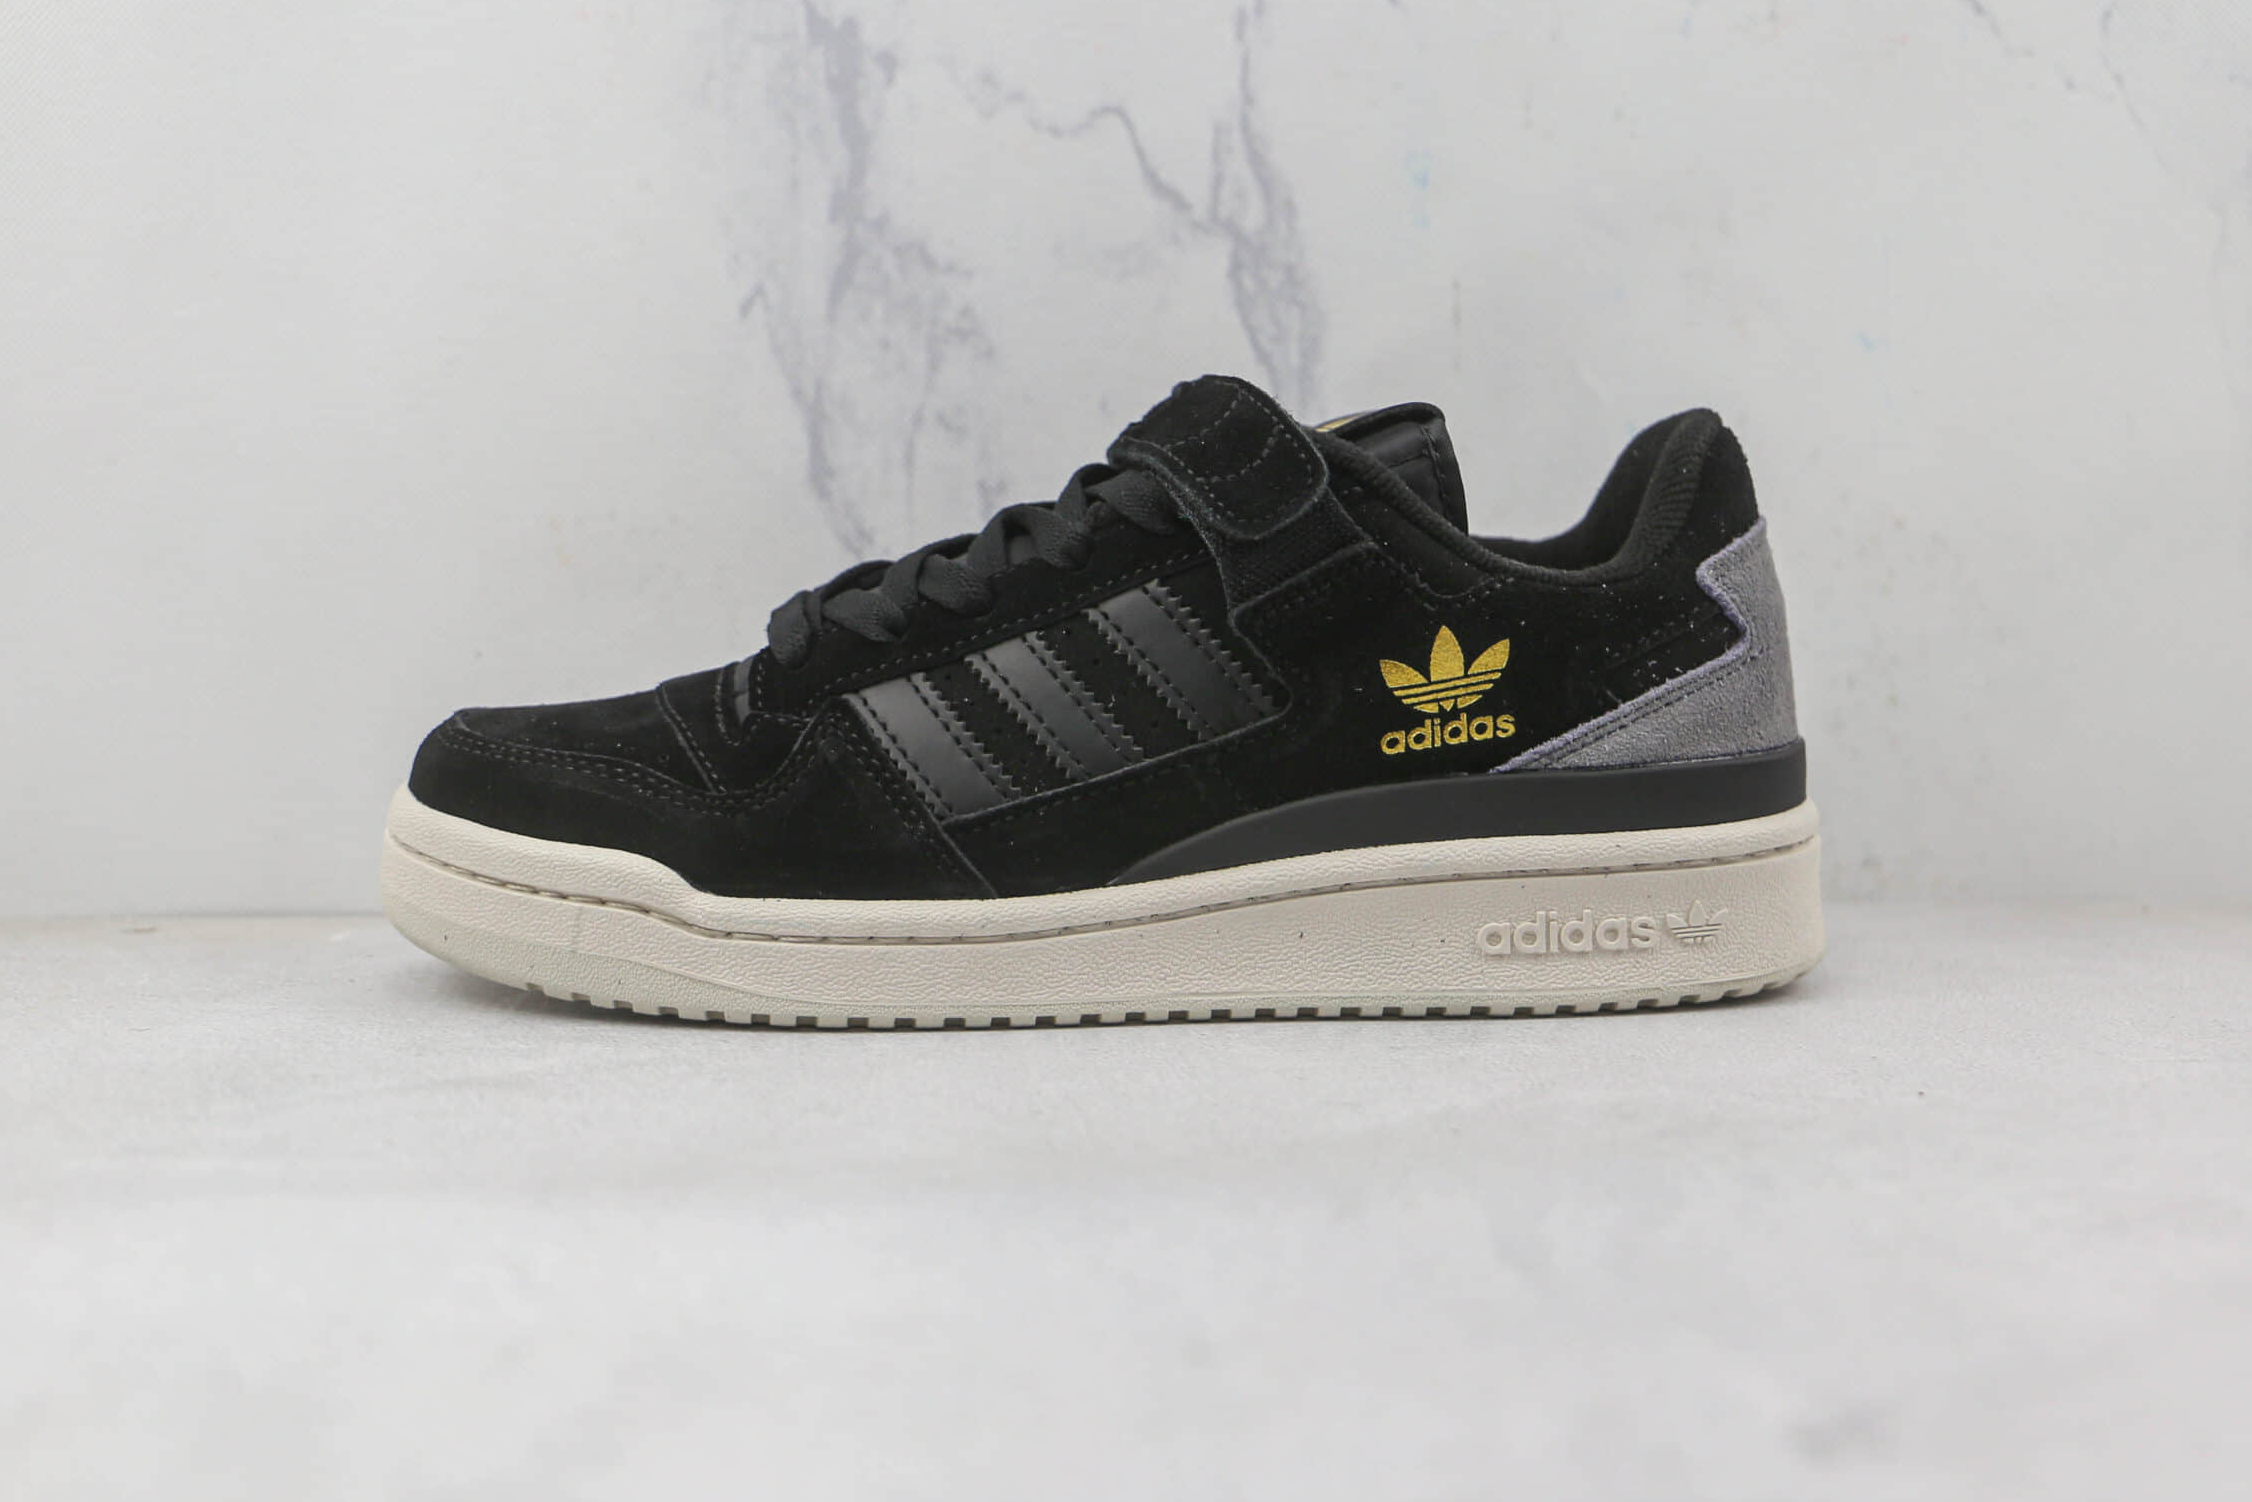 Adidas Forum 84 Low Black White Q46366 - Shop Now!